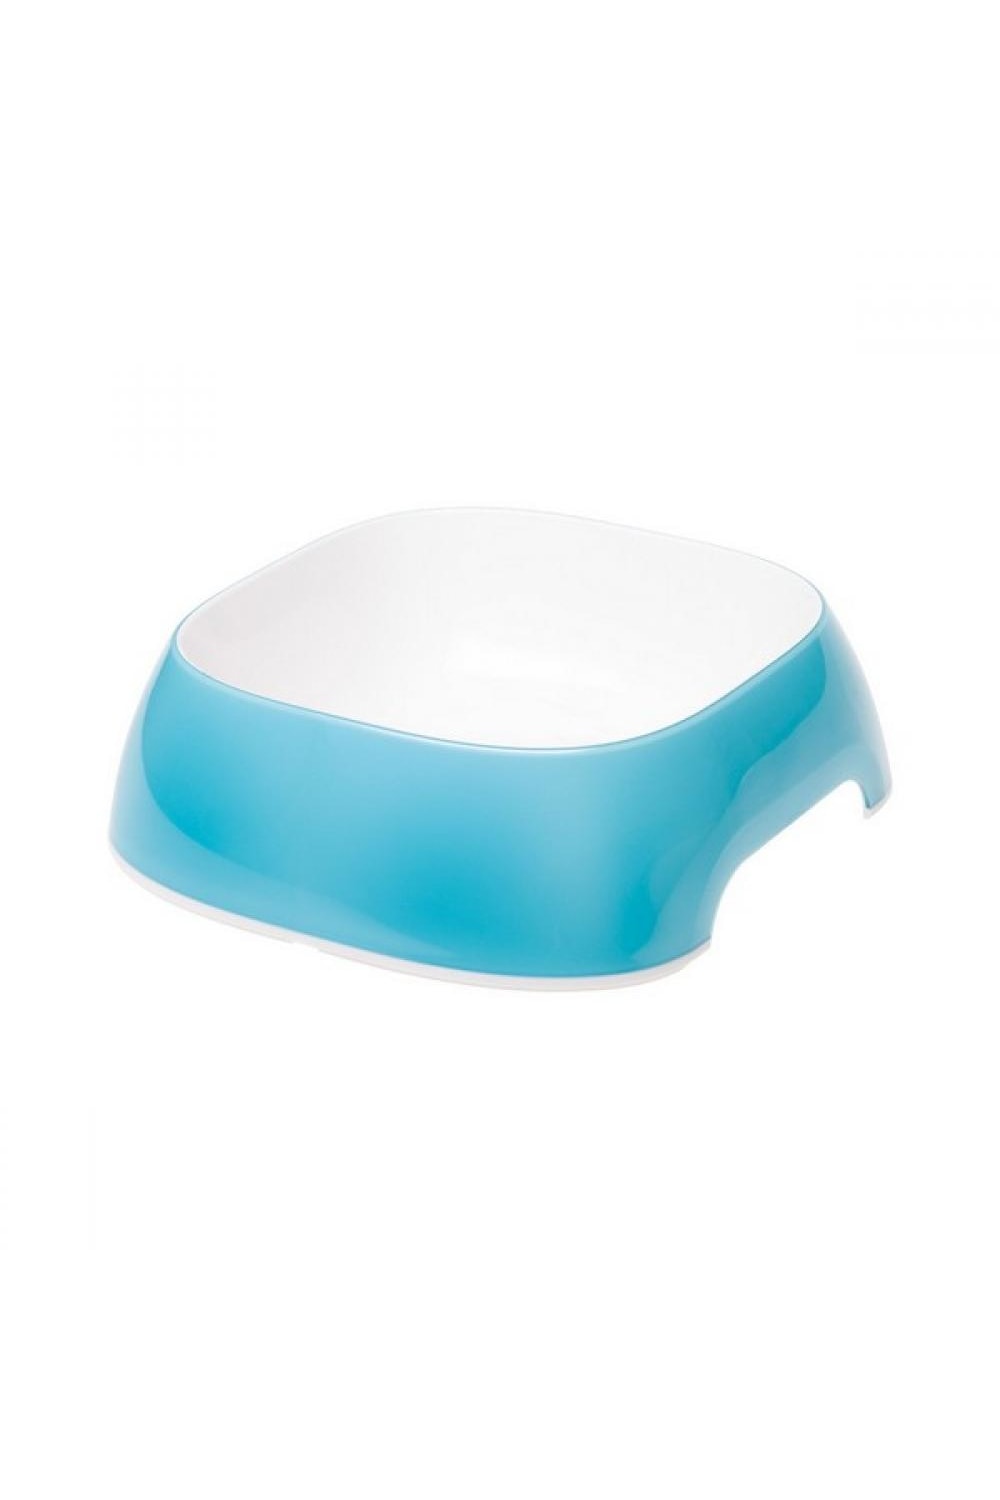 Ferplast Glam Dog Bowl (Blue/White) (9.5 x 9.1 x 2.8in)